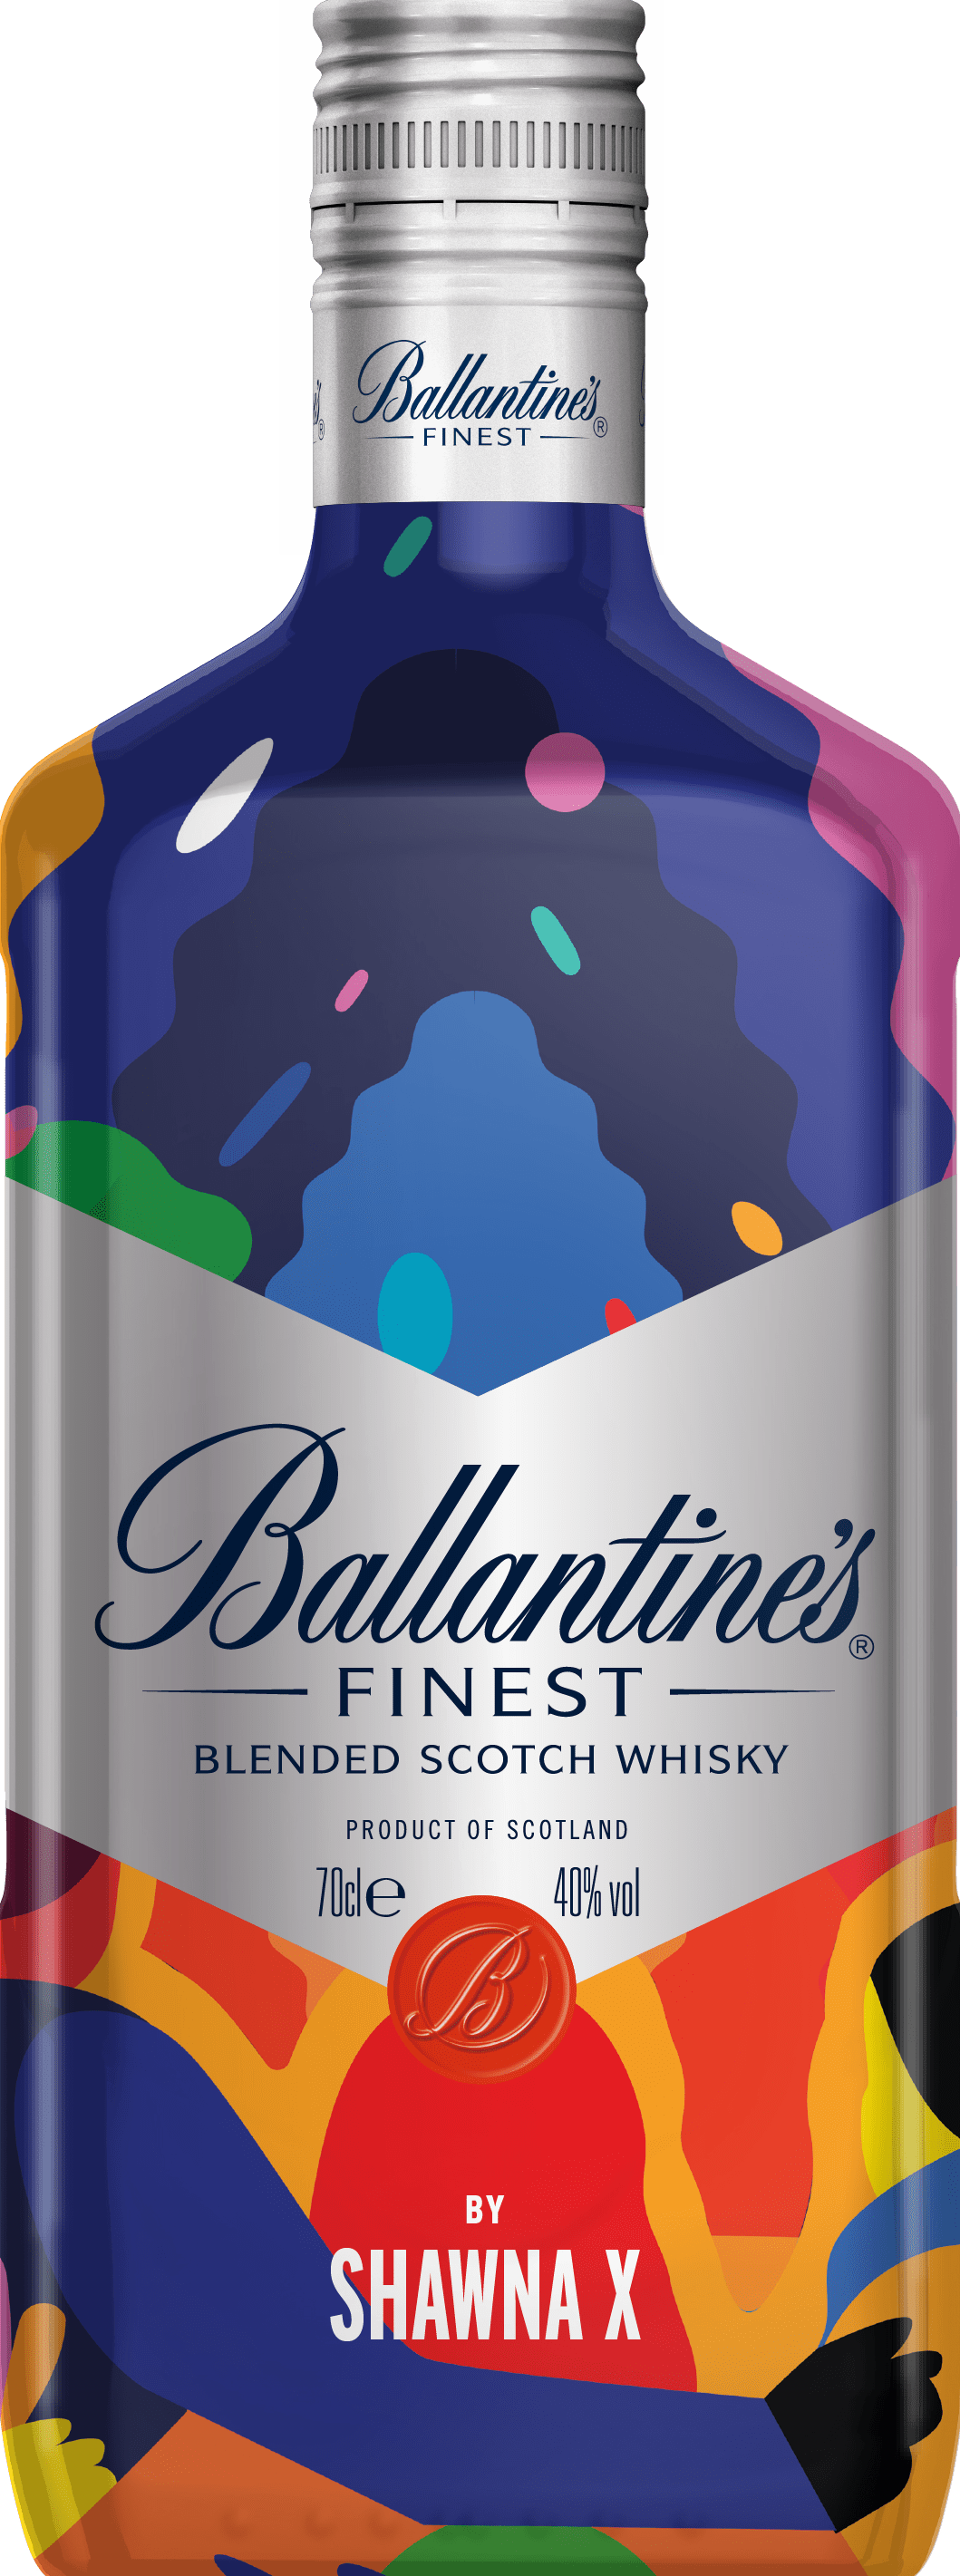 Ballantines Finest Blended Scotch Whisky 750ml Bottle